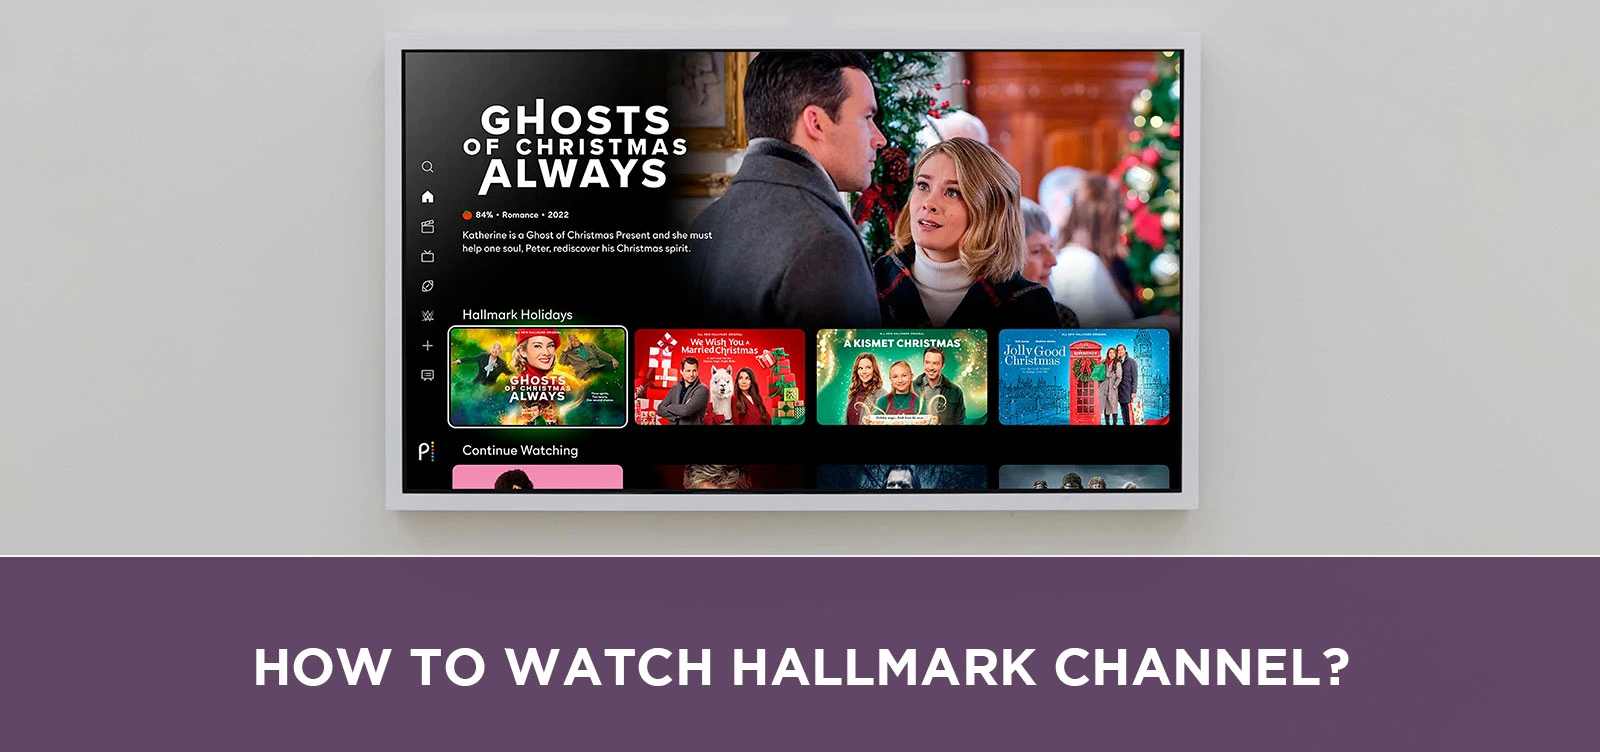 How to Watch Hallmark Channel?